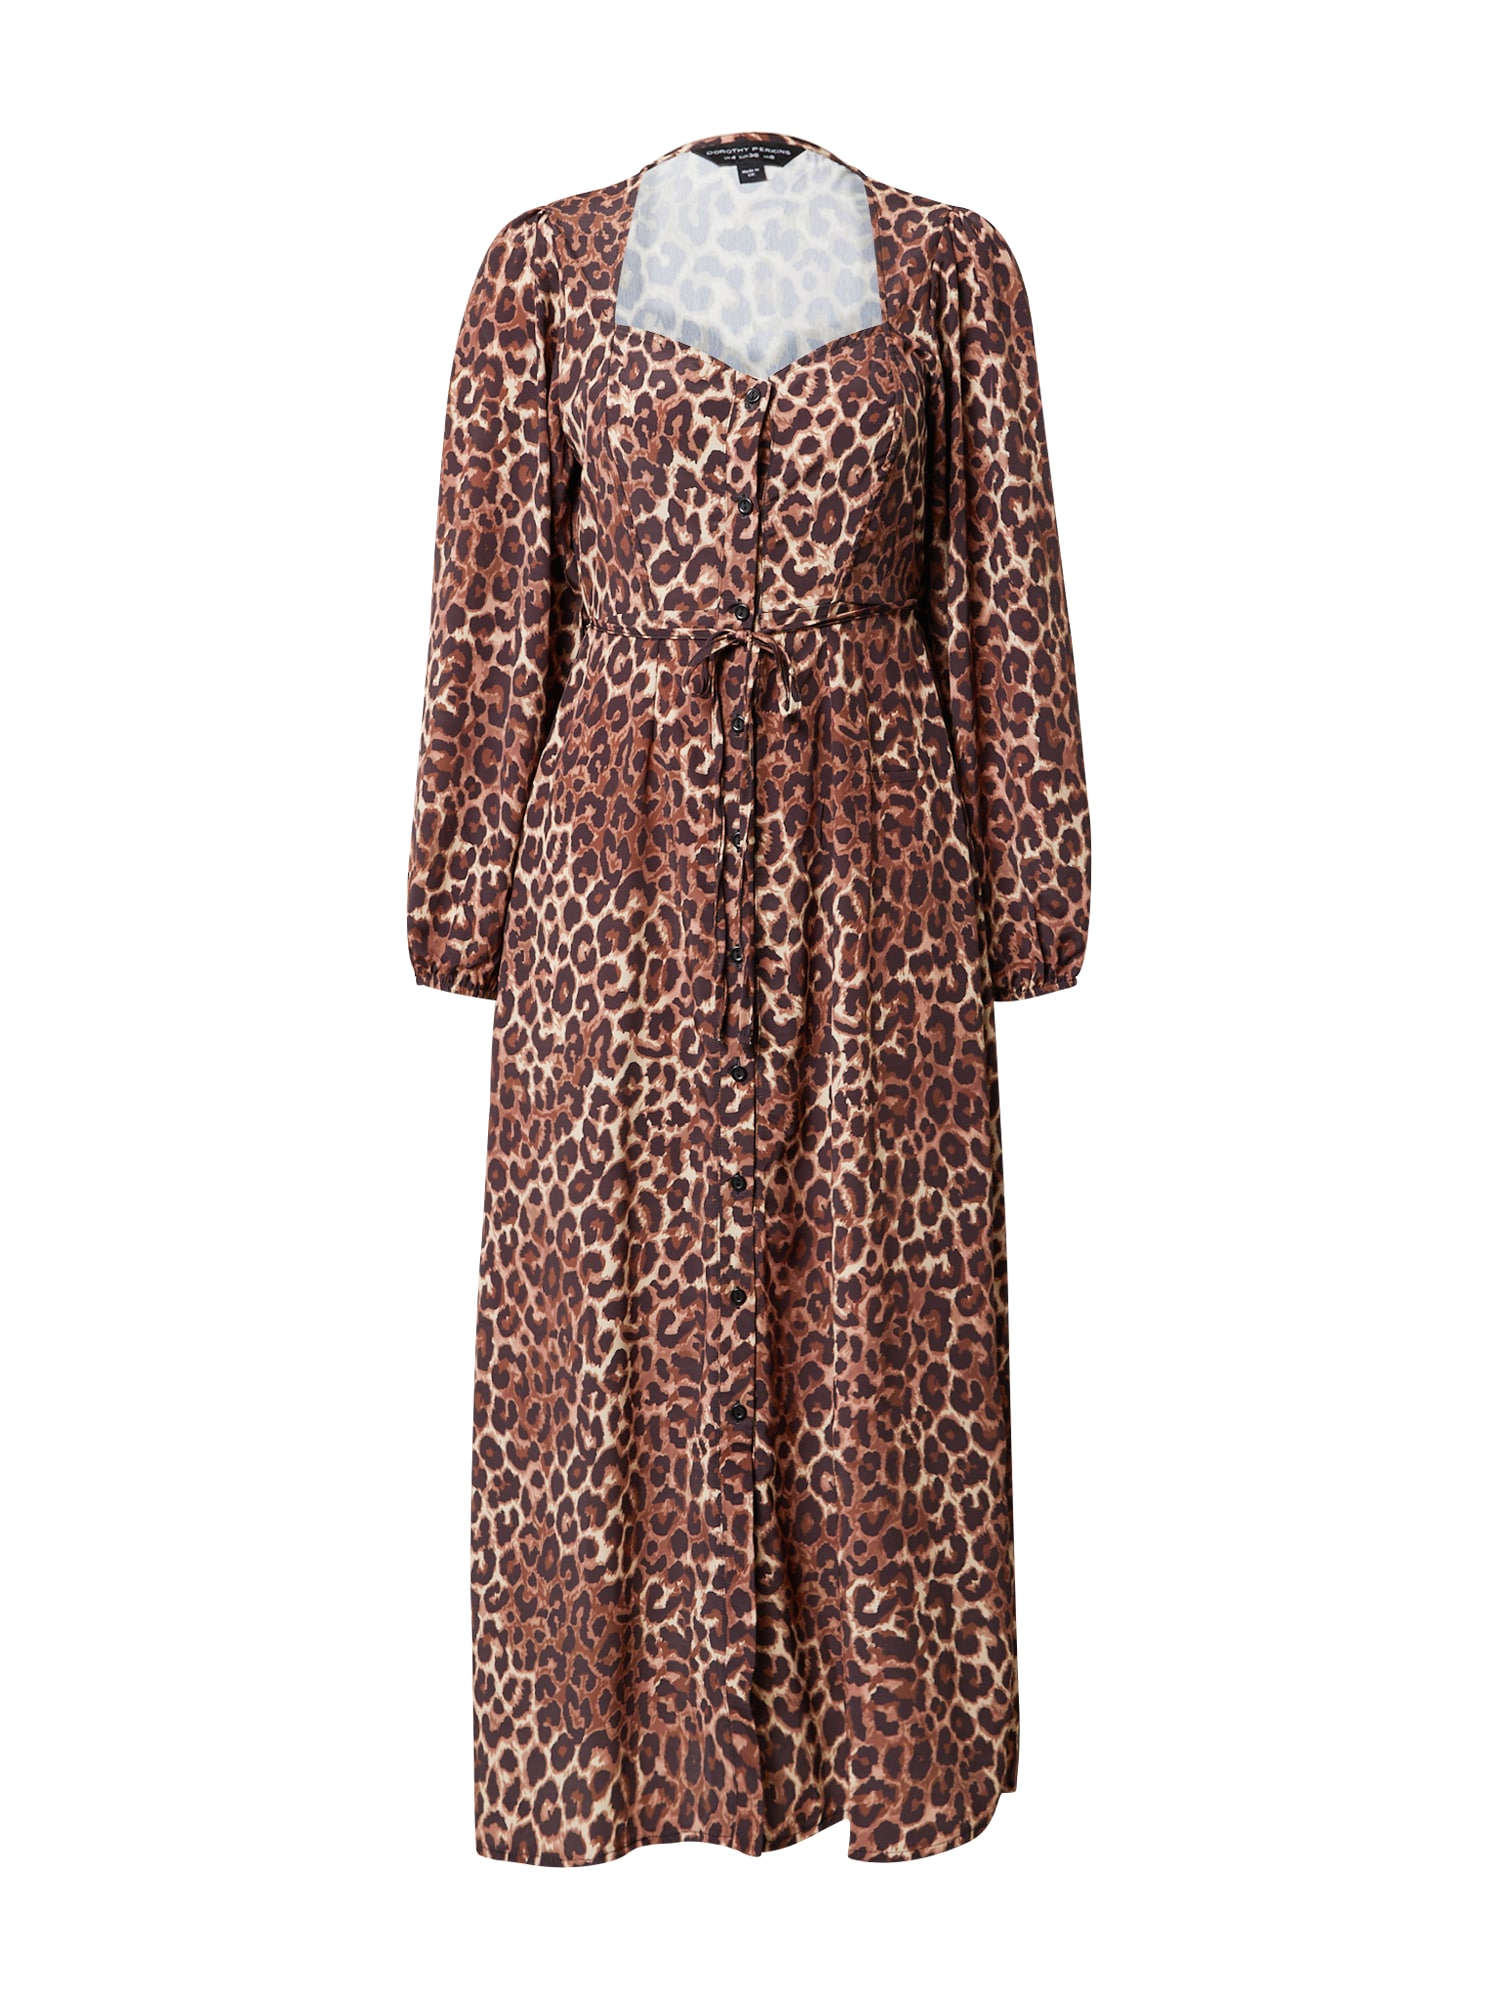 Košeľové šaty Kitty krémová čokoládová pueblo Dorothy Perkins